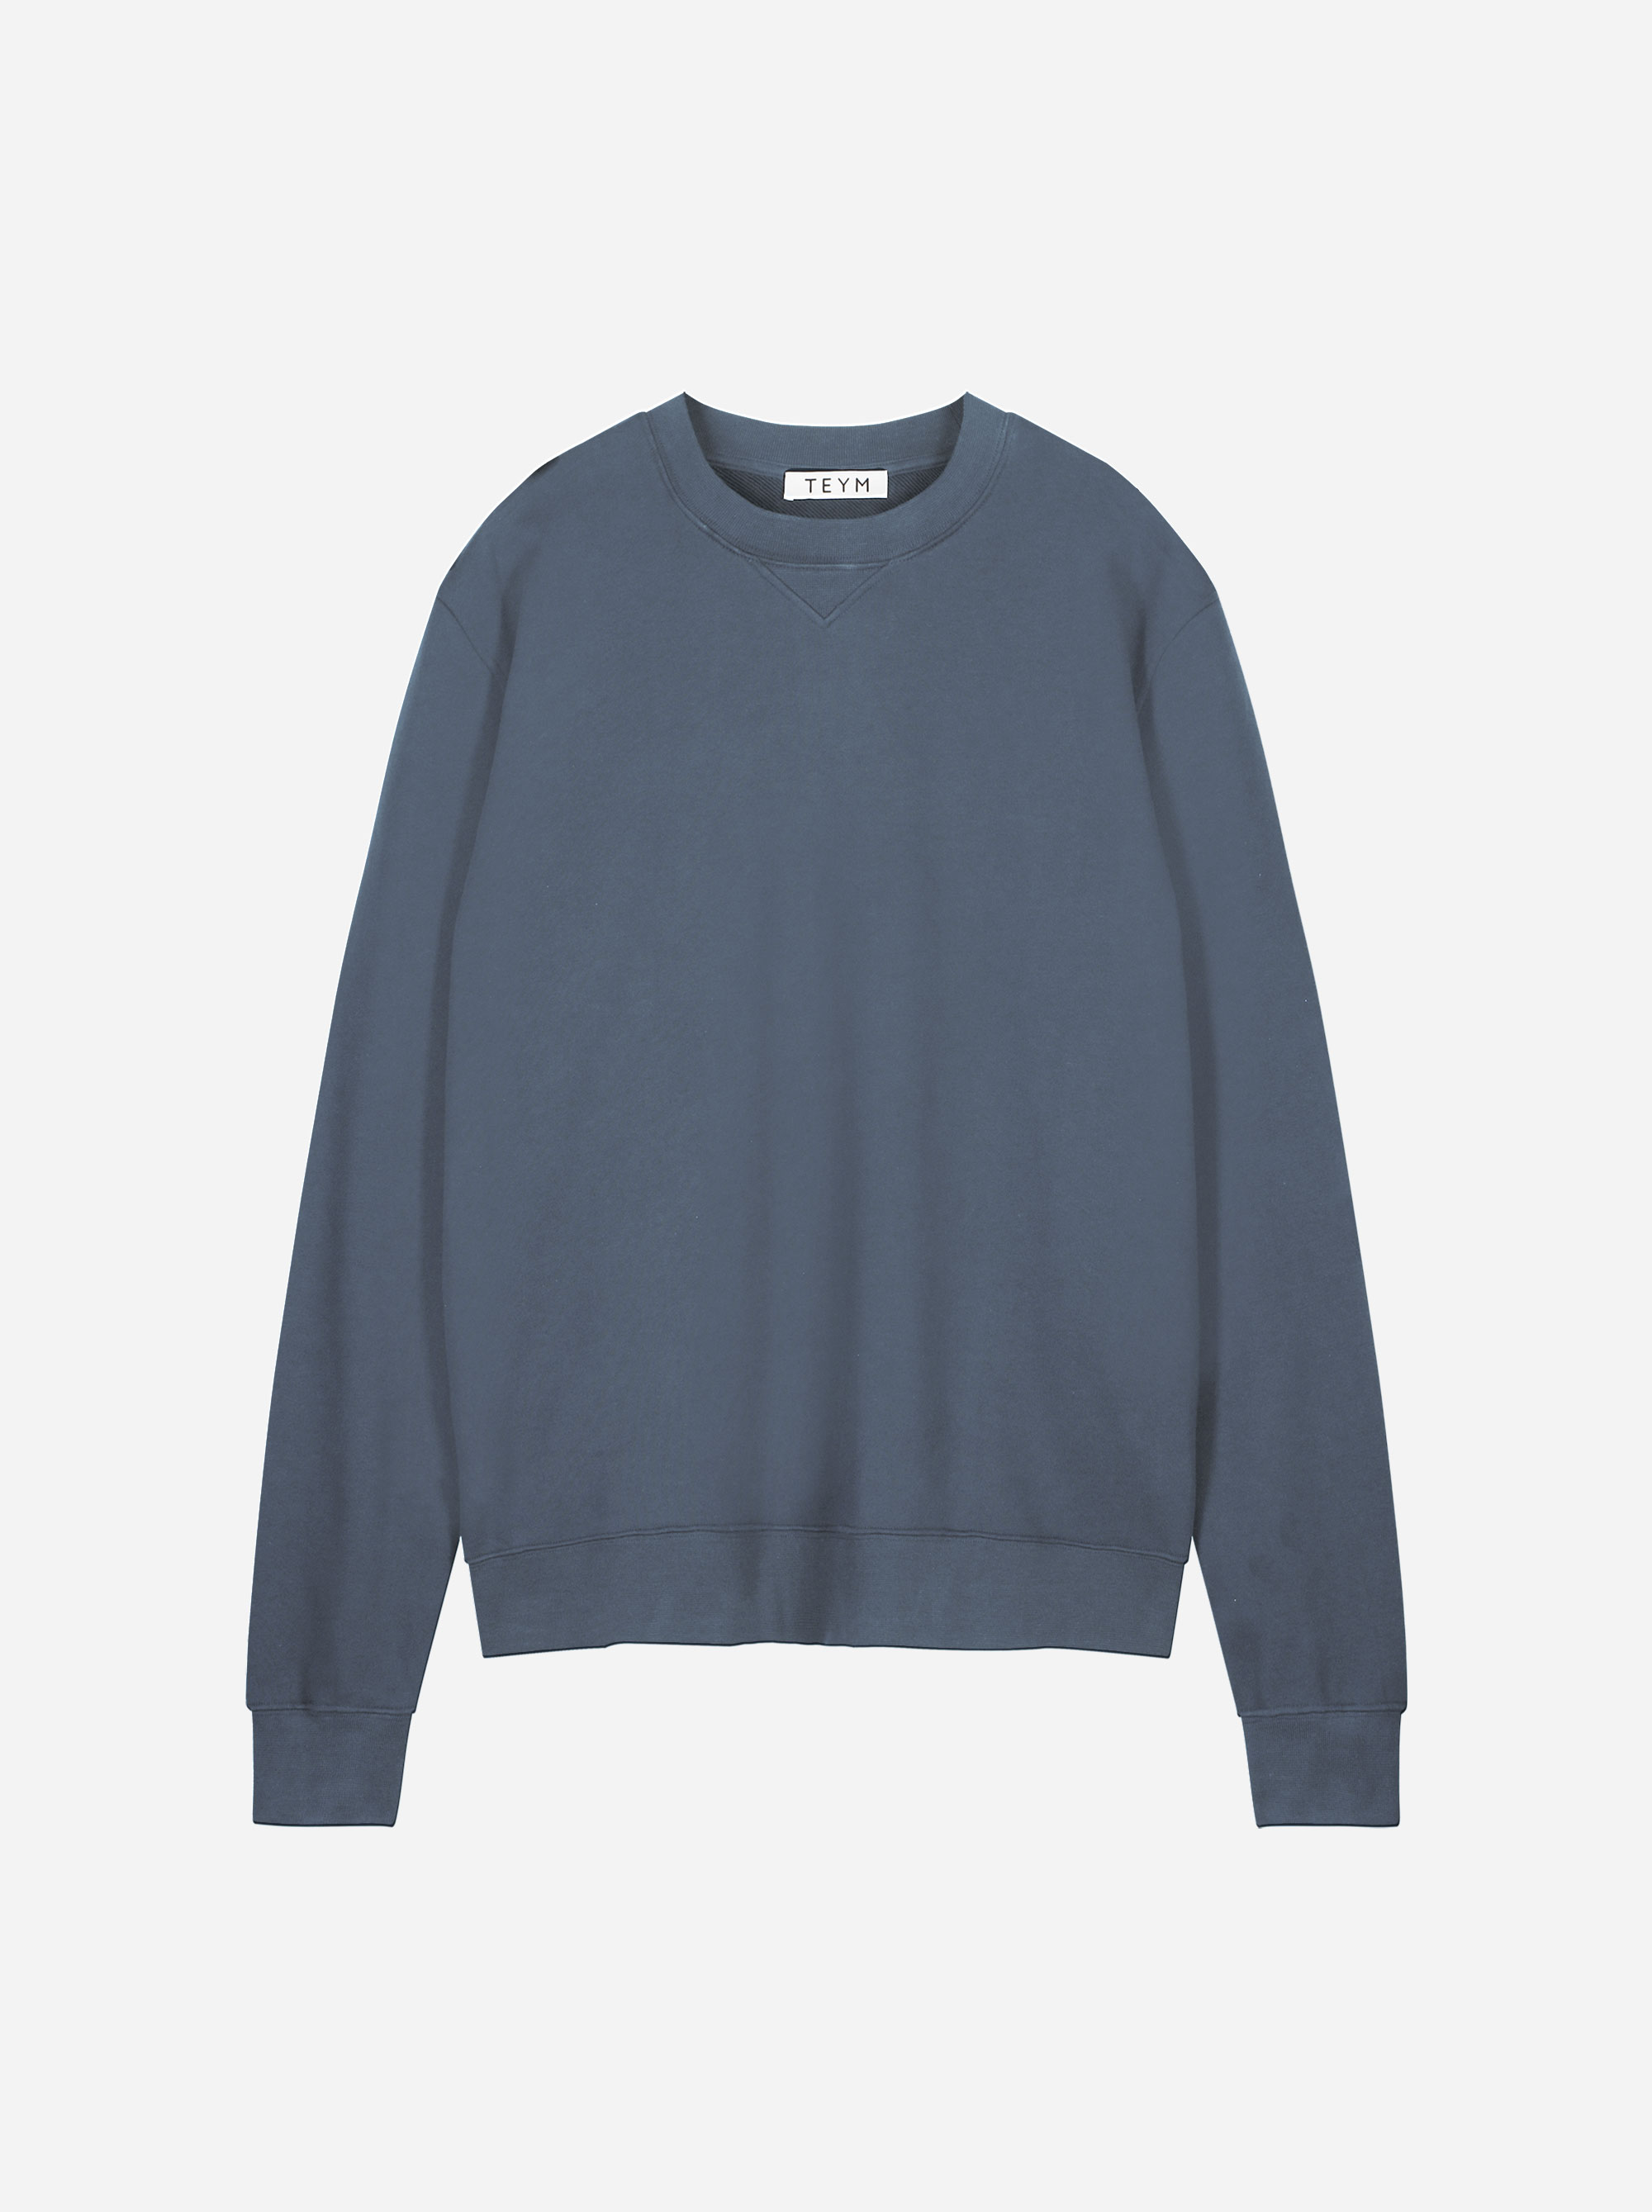 Teym - The Sweatshirt - Men - Blue Grey - 3